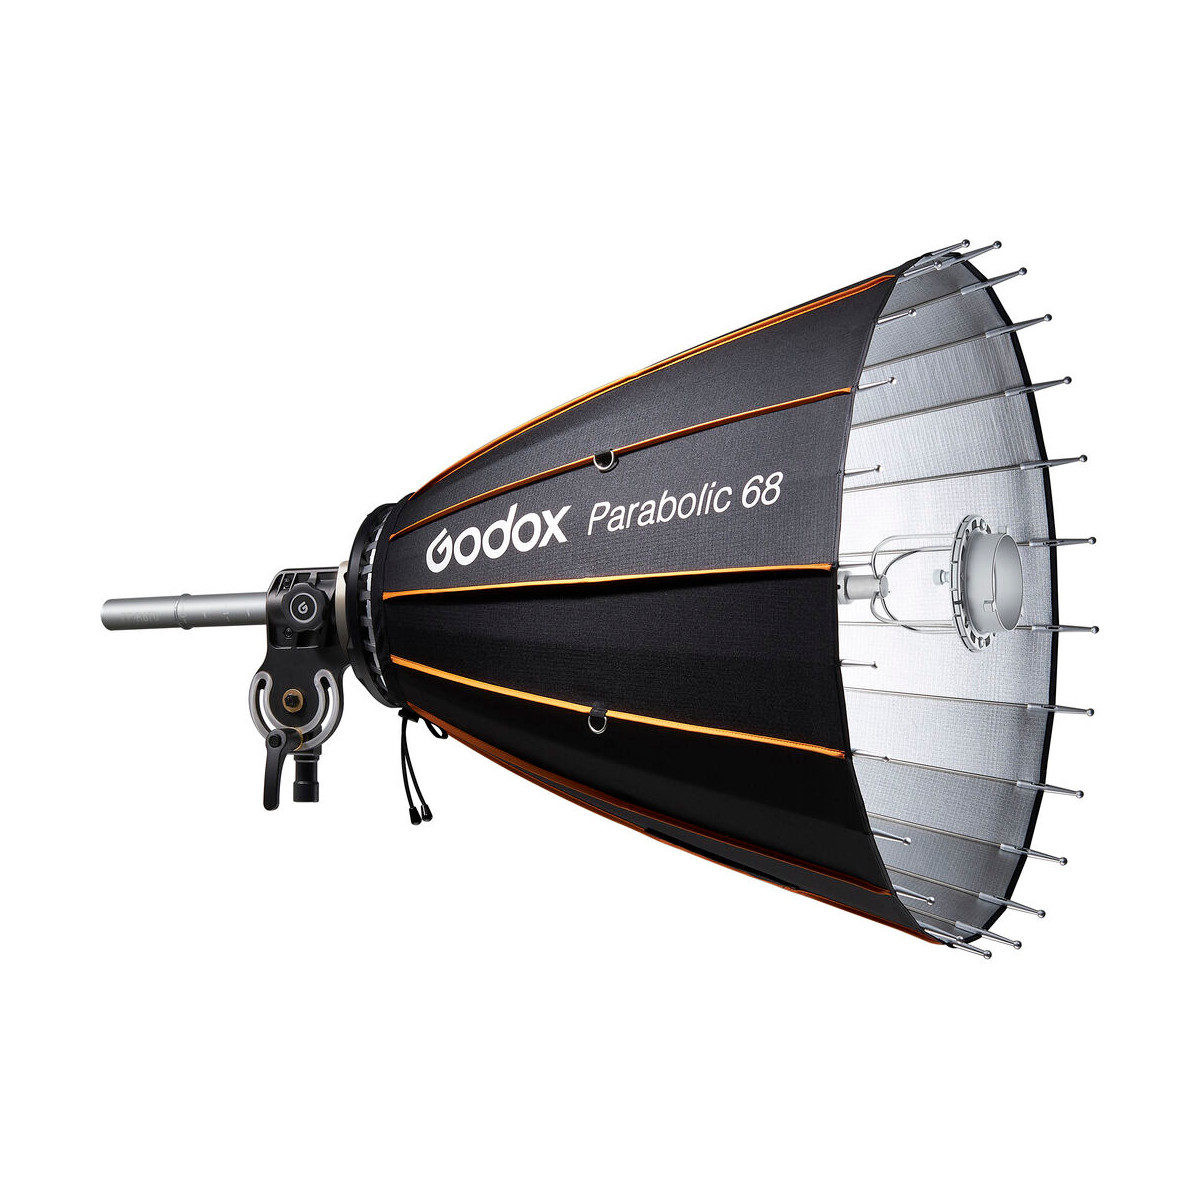 Godox P68 Parabolic Light Focusing System Kit